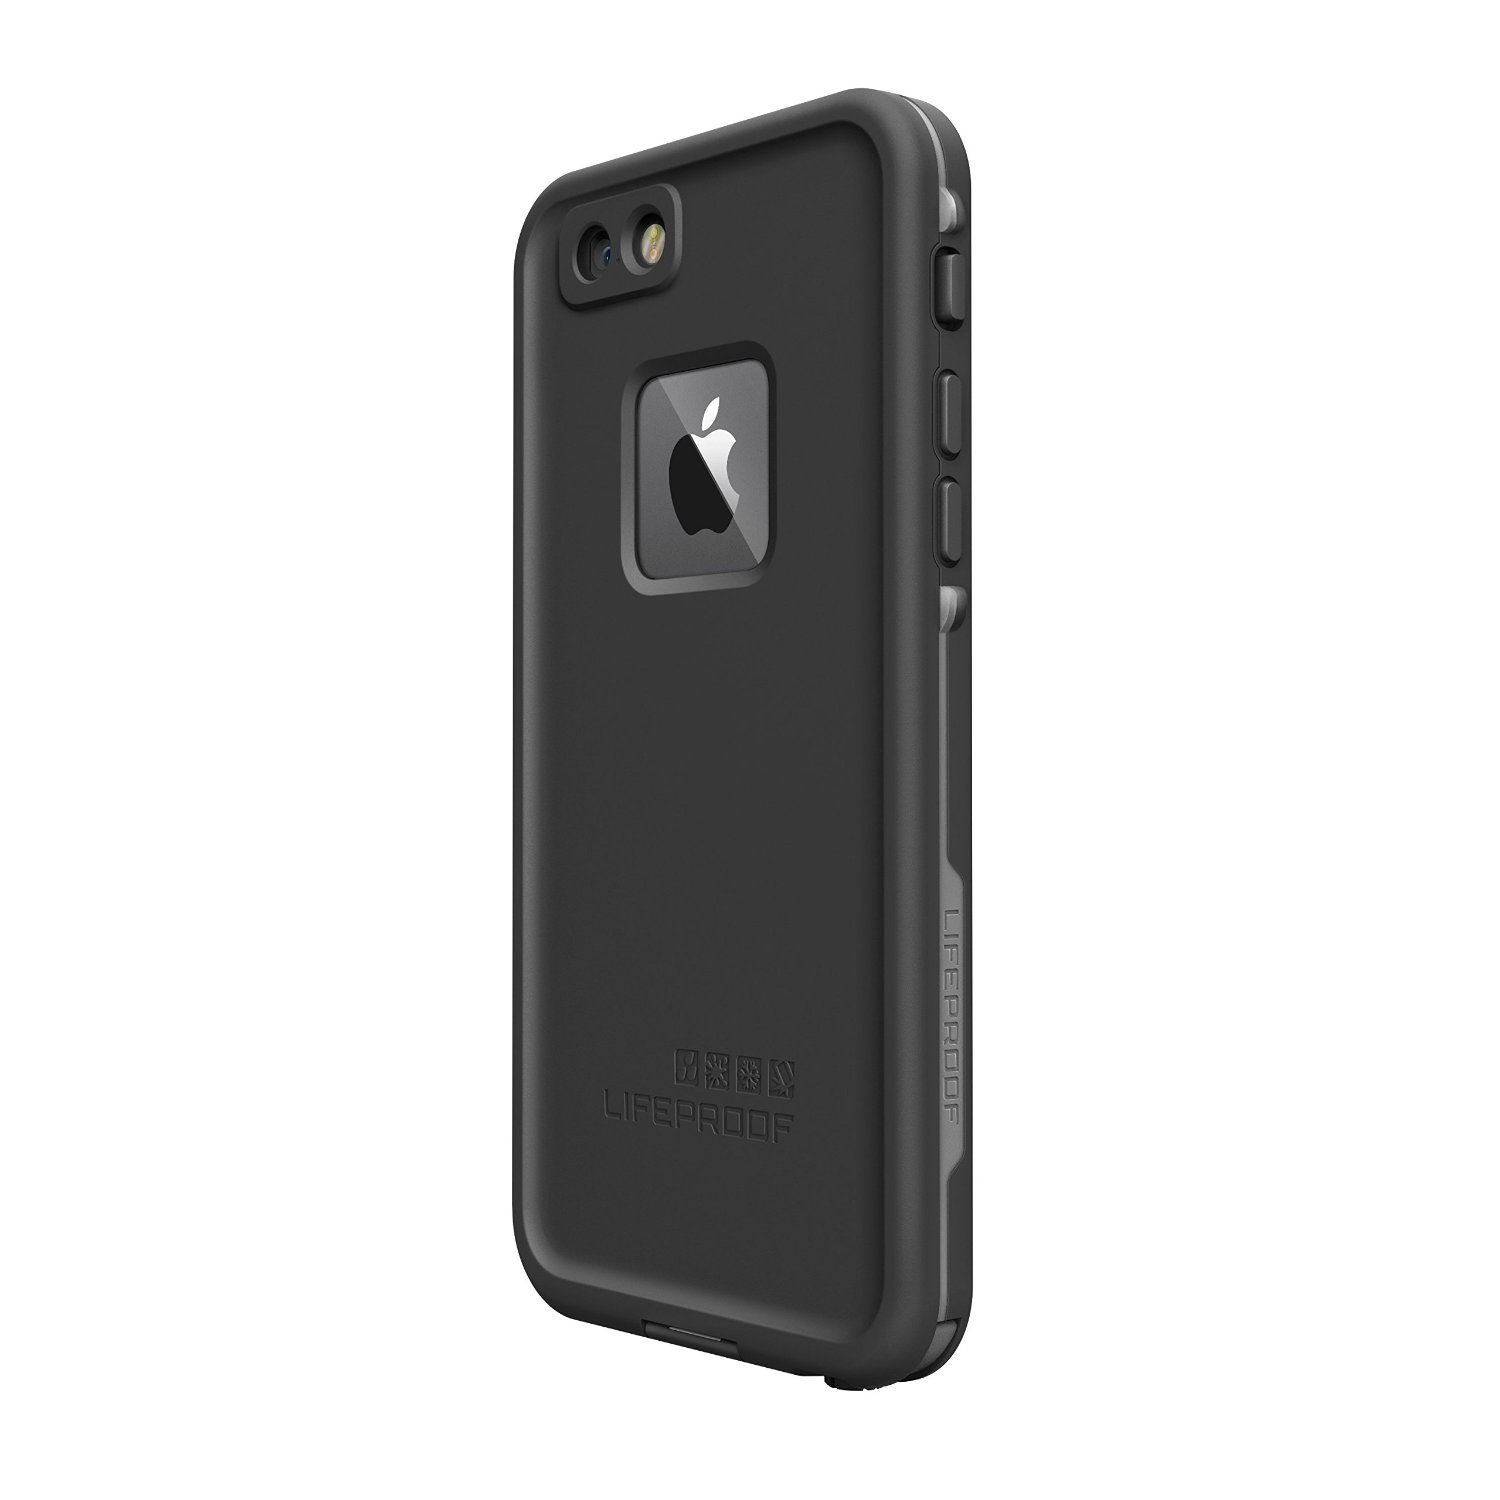 Lifeproof Fre Iphone 6 Product Image